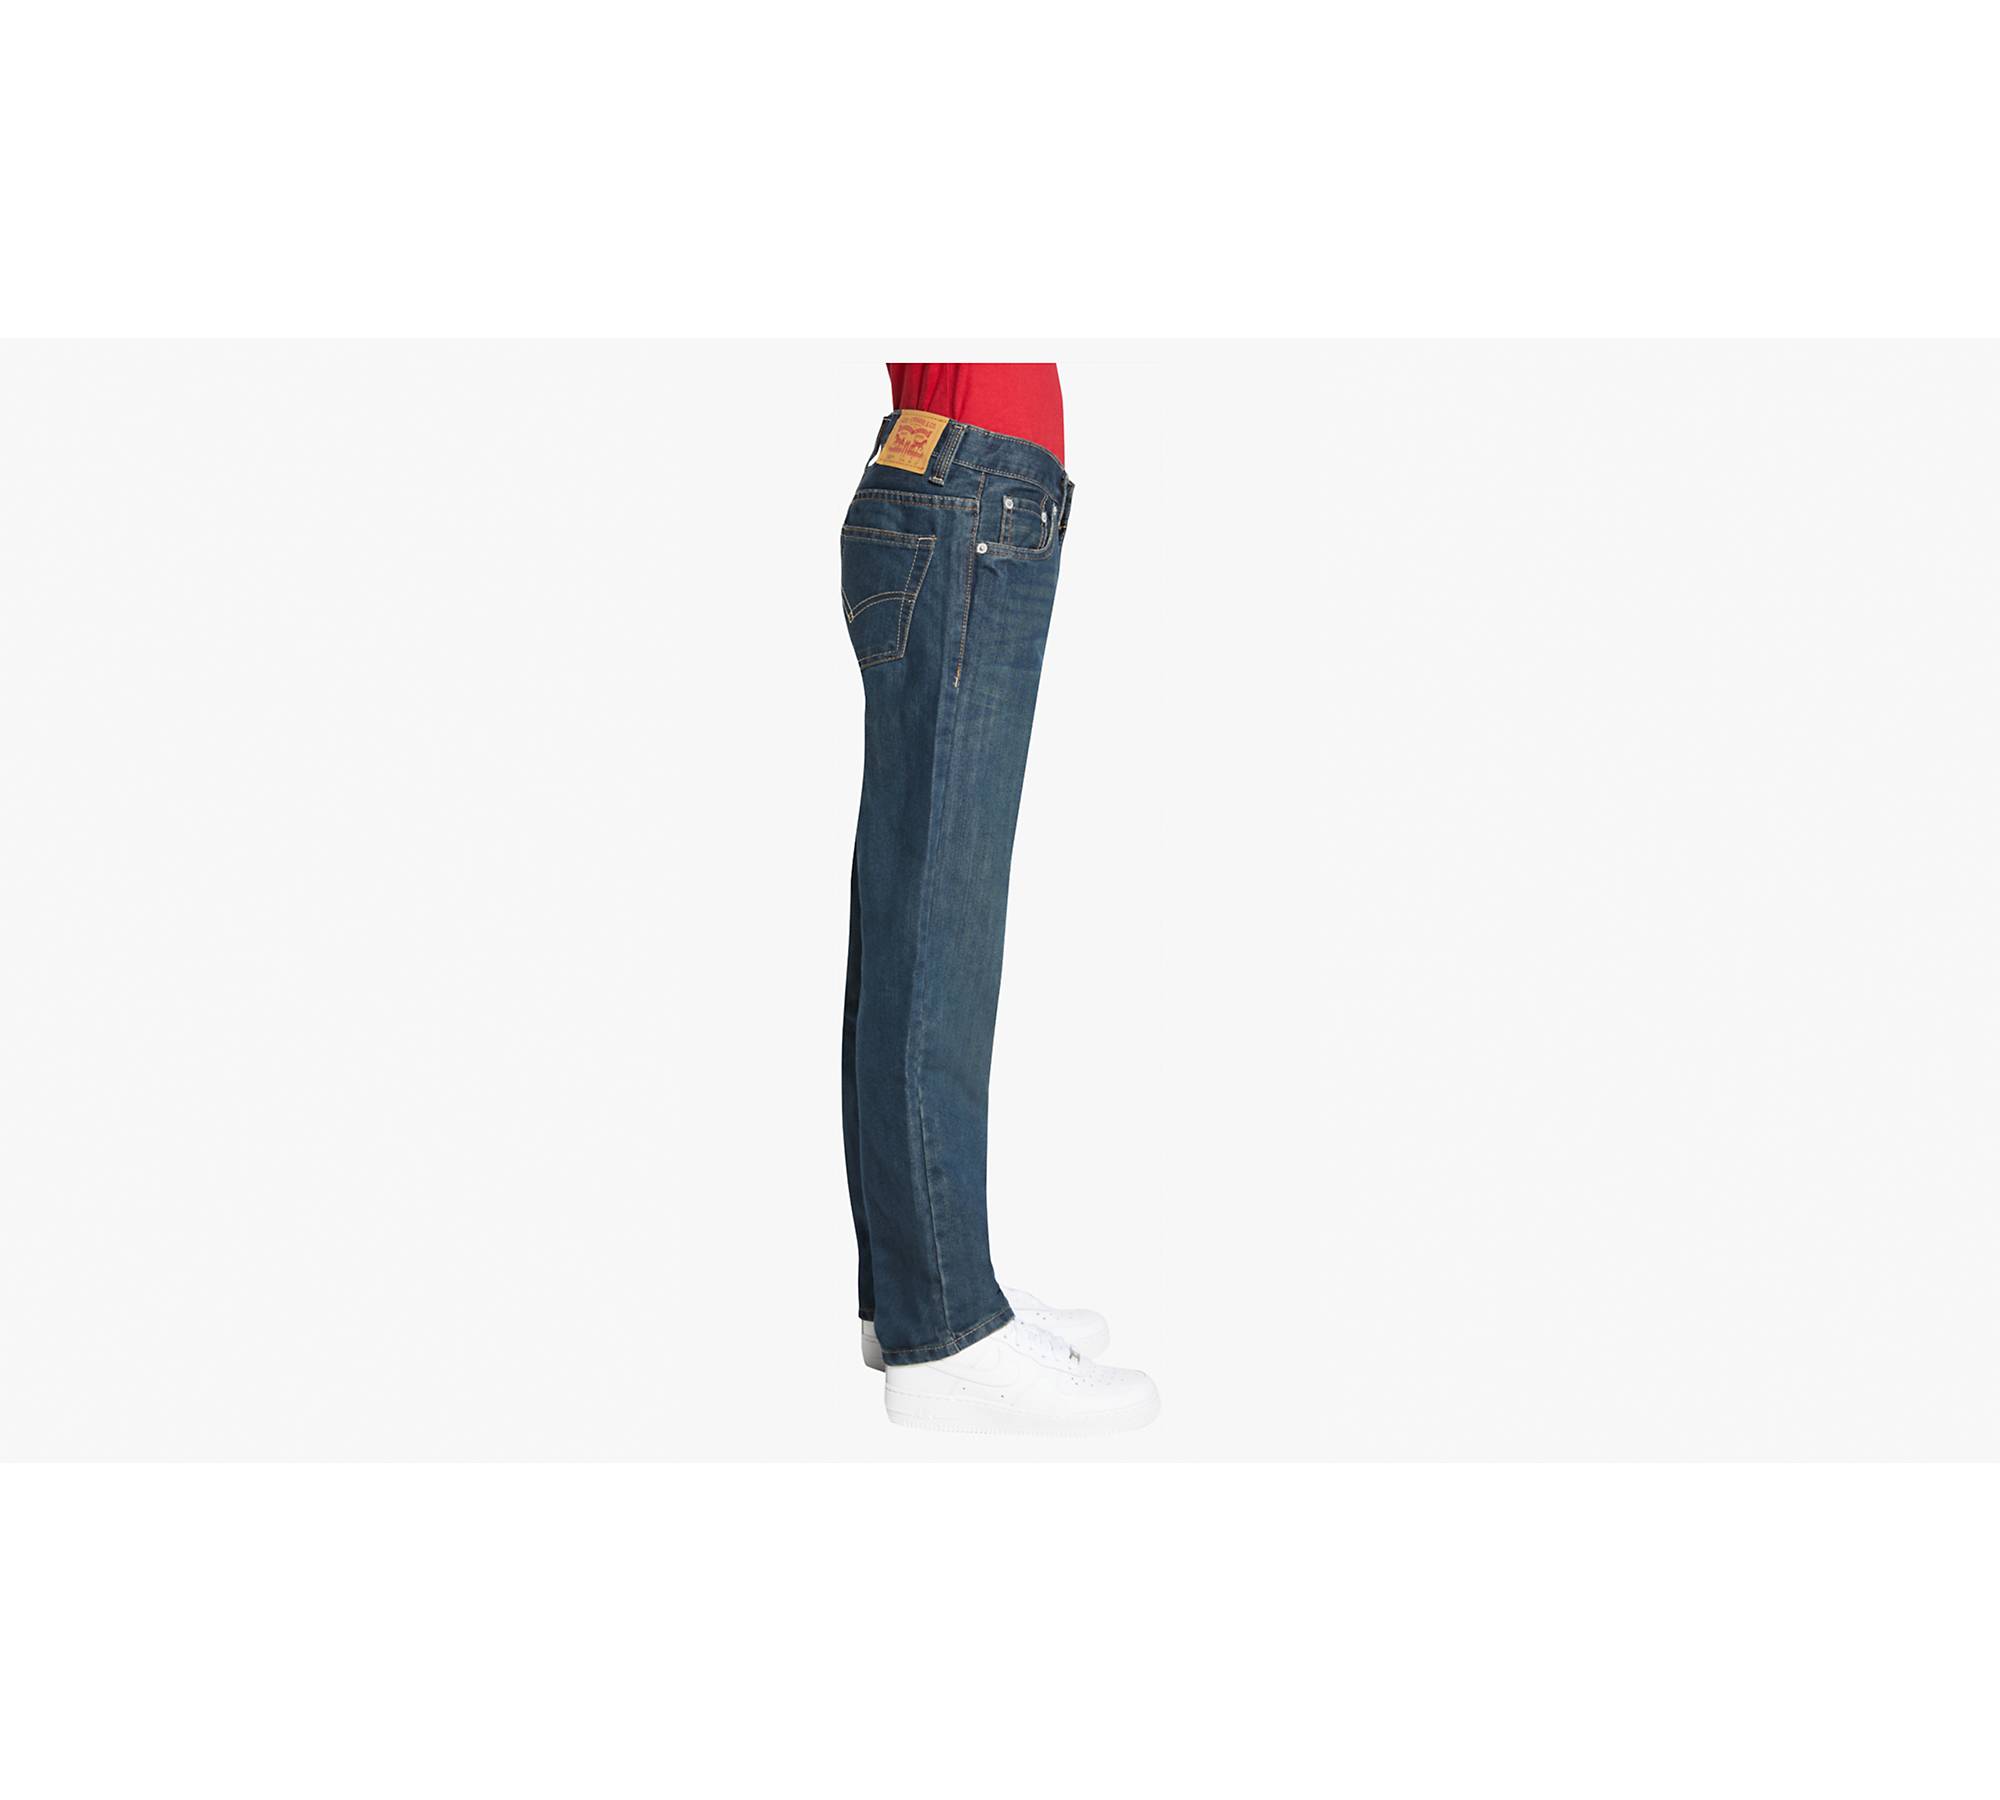 505™ Regular Fit Husky Big Boys Jeans 8-20 - Medium Wash